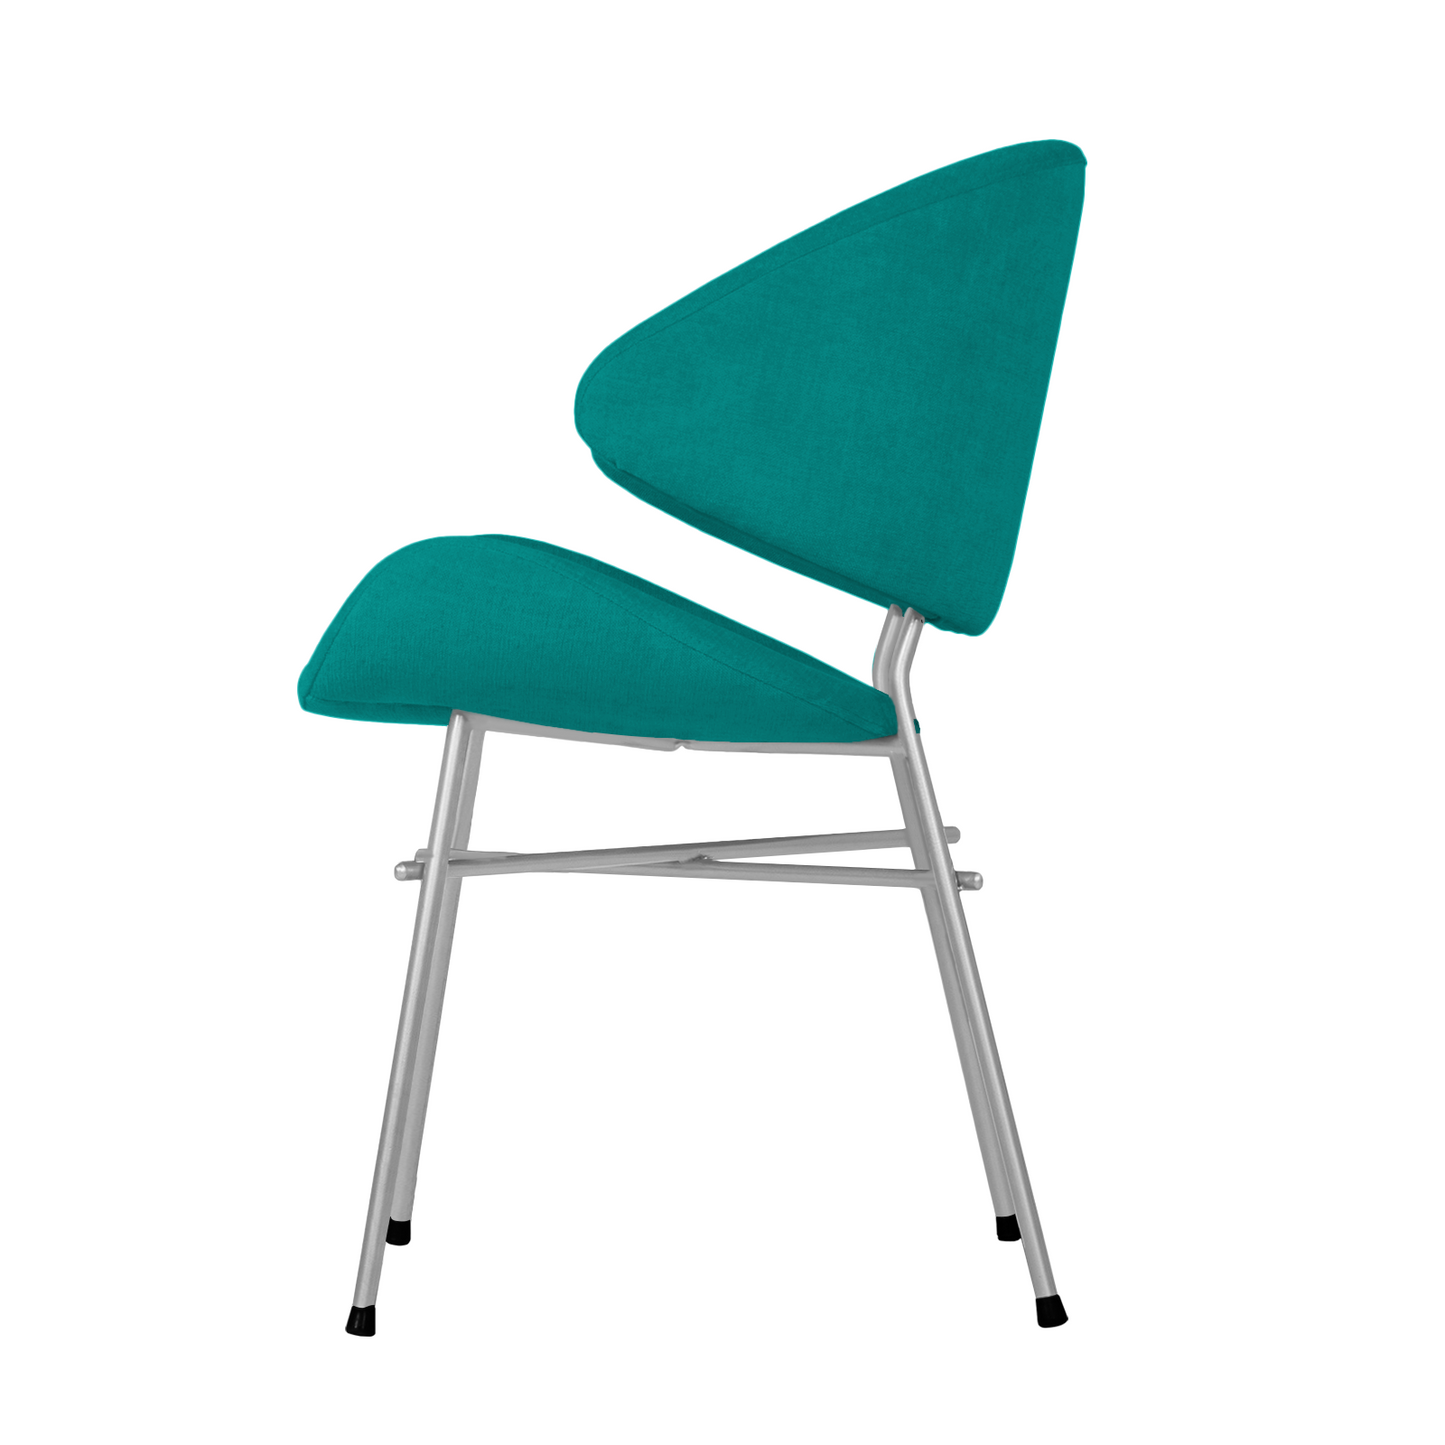 Chair Cheri Trend Chrome - Turquoise